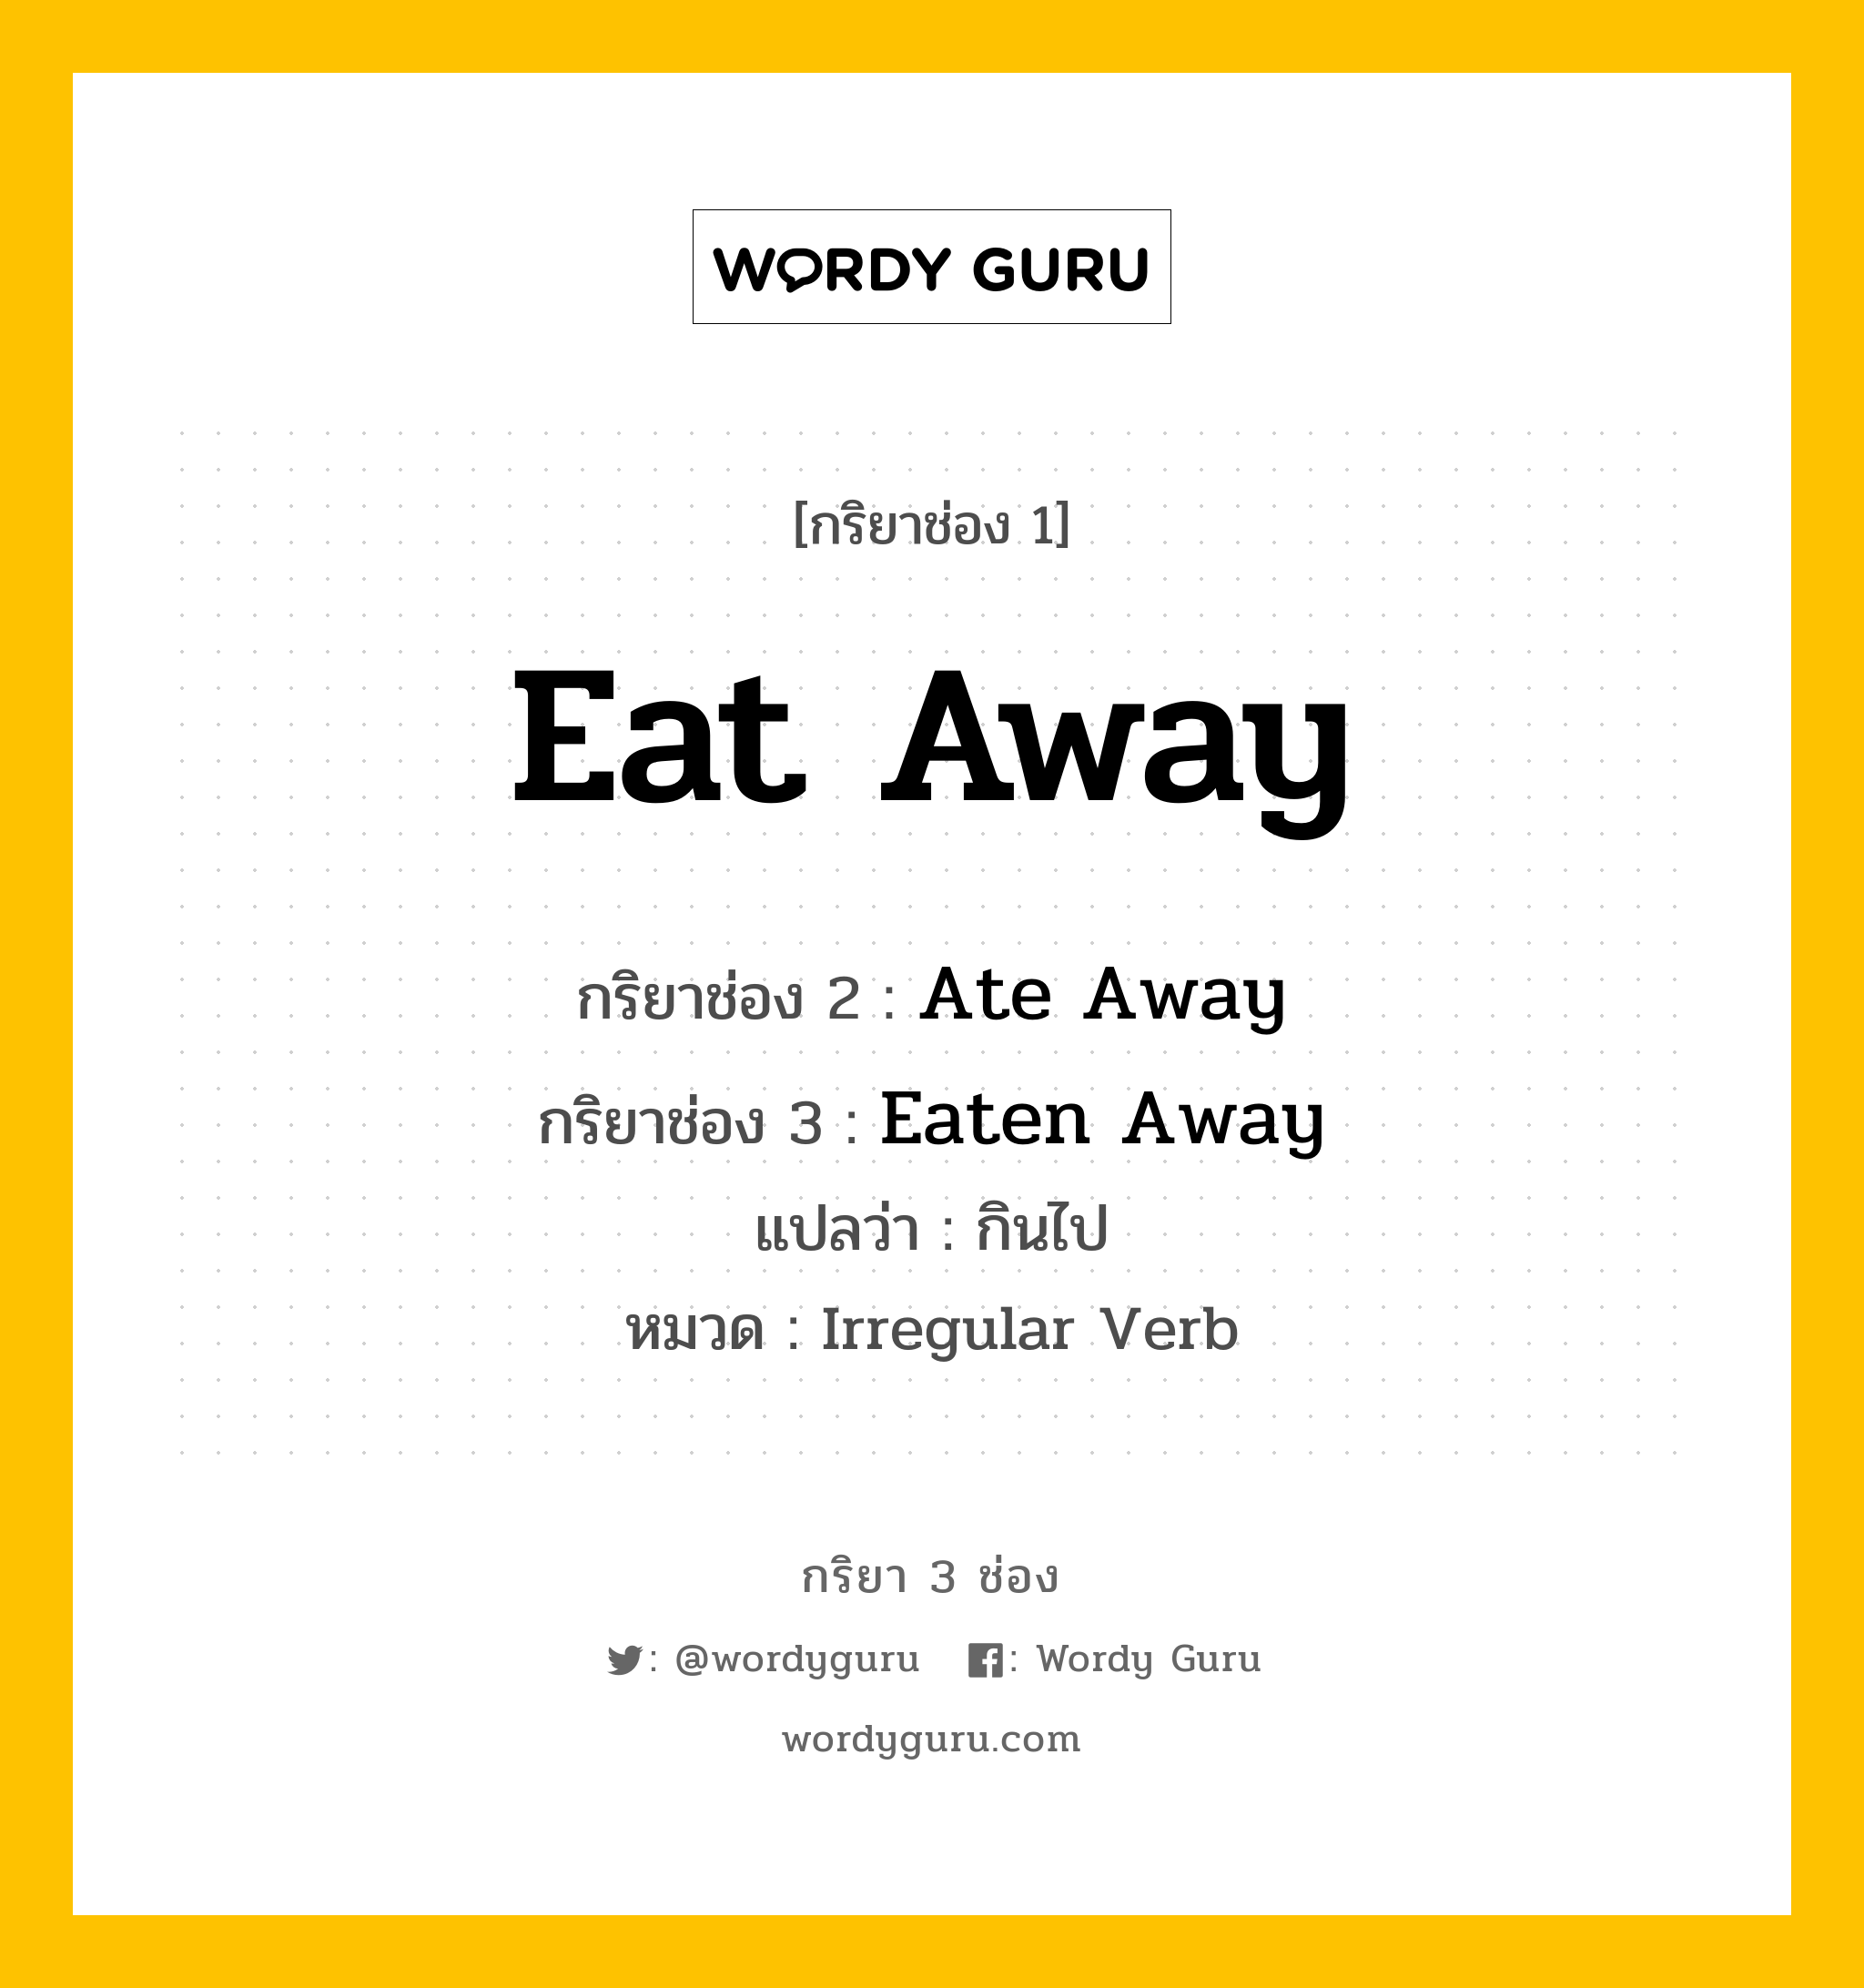 Eat Away มีกริยา 3 ช่องอะไรบ้าง? คำศัพท์ในกลุ่มประเภท Irregular Verb, กริยาช่อง 1 Eat Away กริยาช่อง 2 Ate Away กริยาช่อง 3 Eaten Away แปลว่า กินไป หมวด Irregular Verb หมวด Irregular Verb